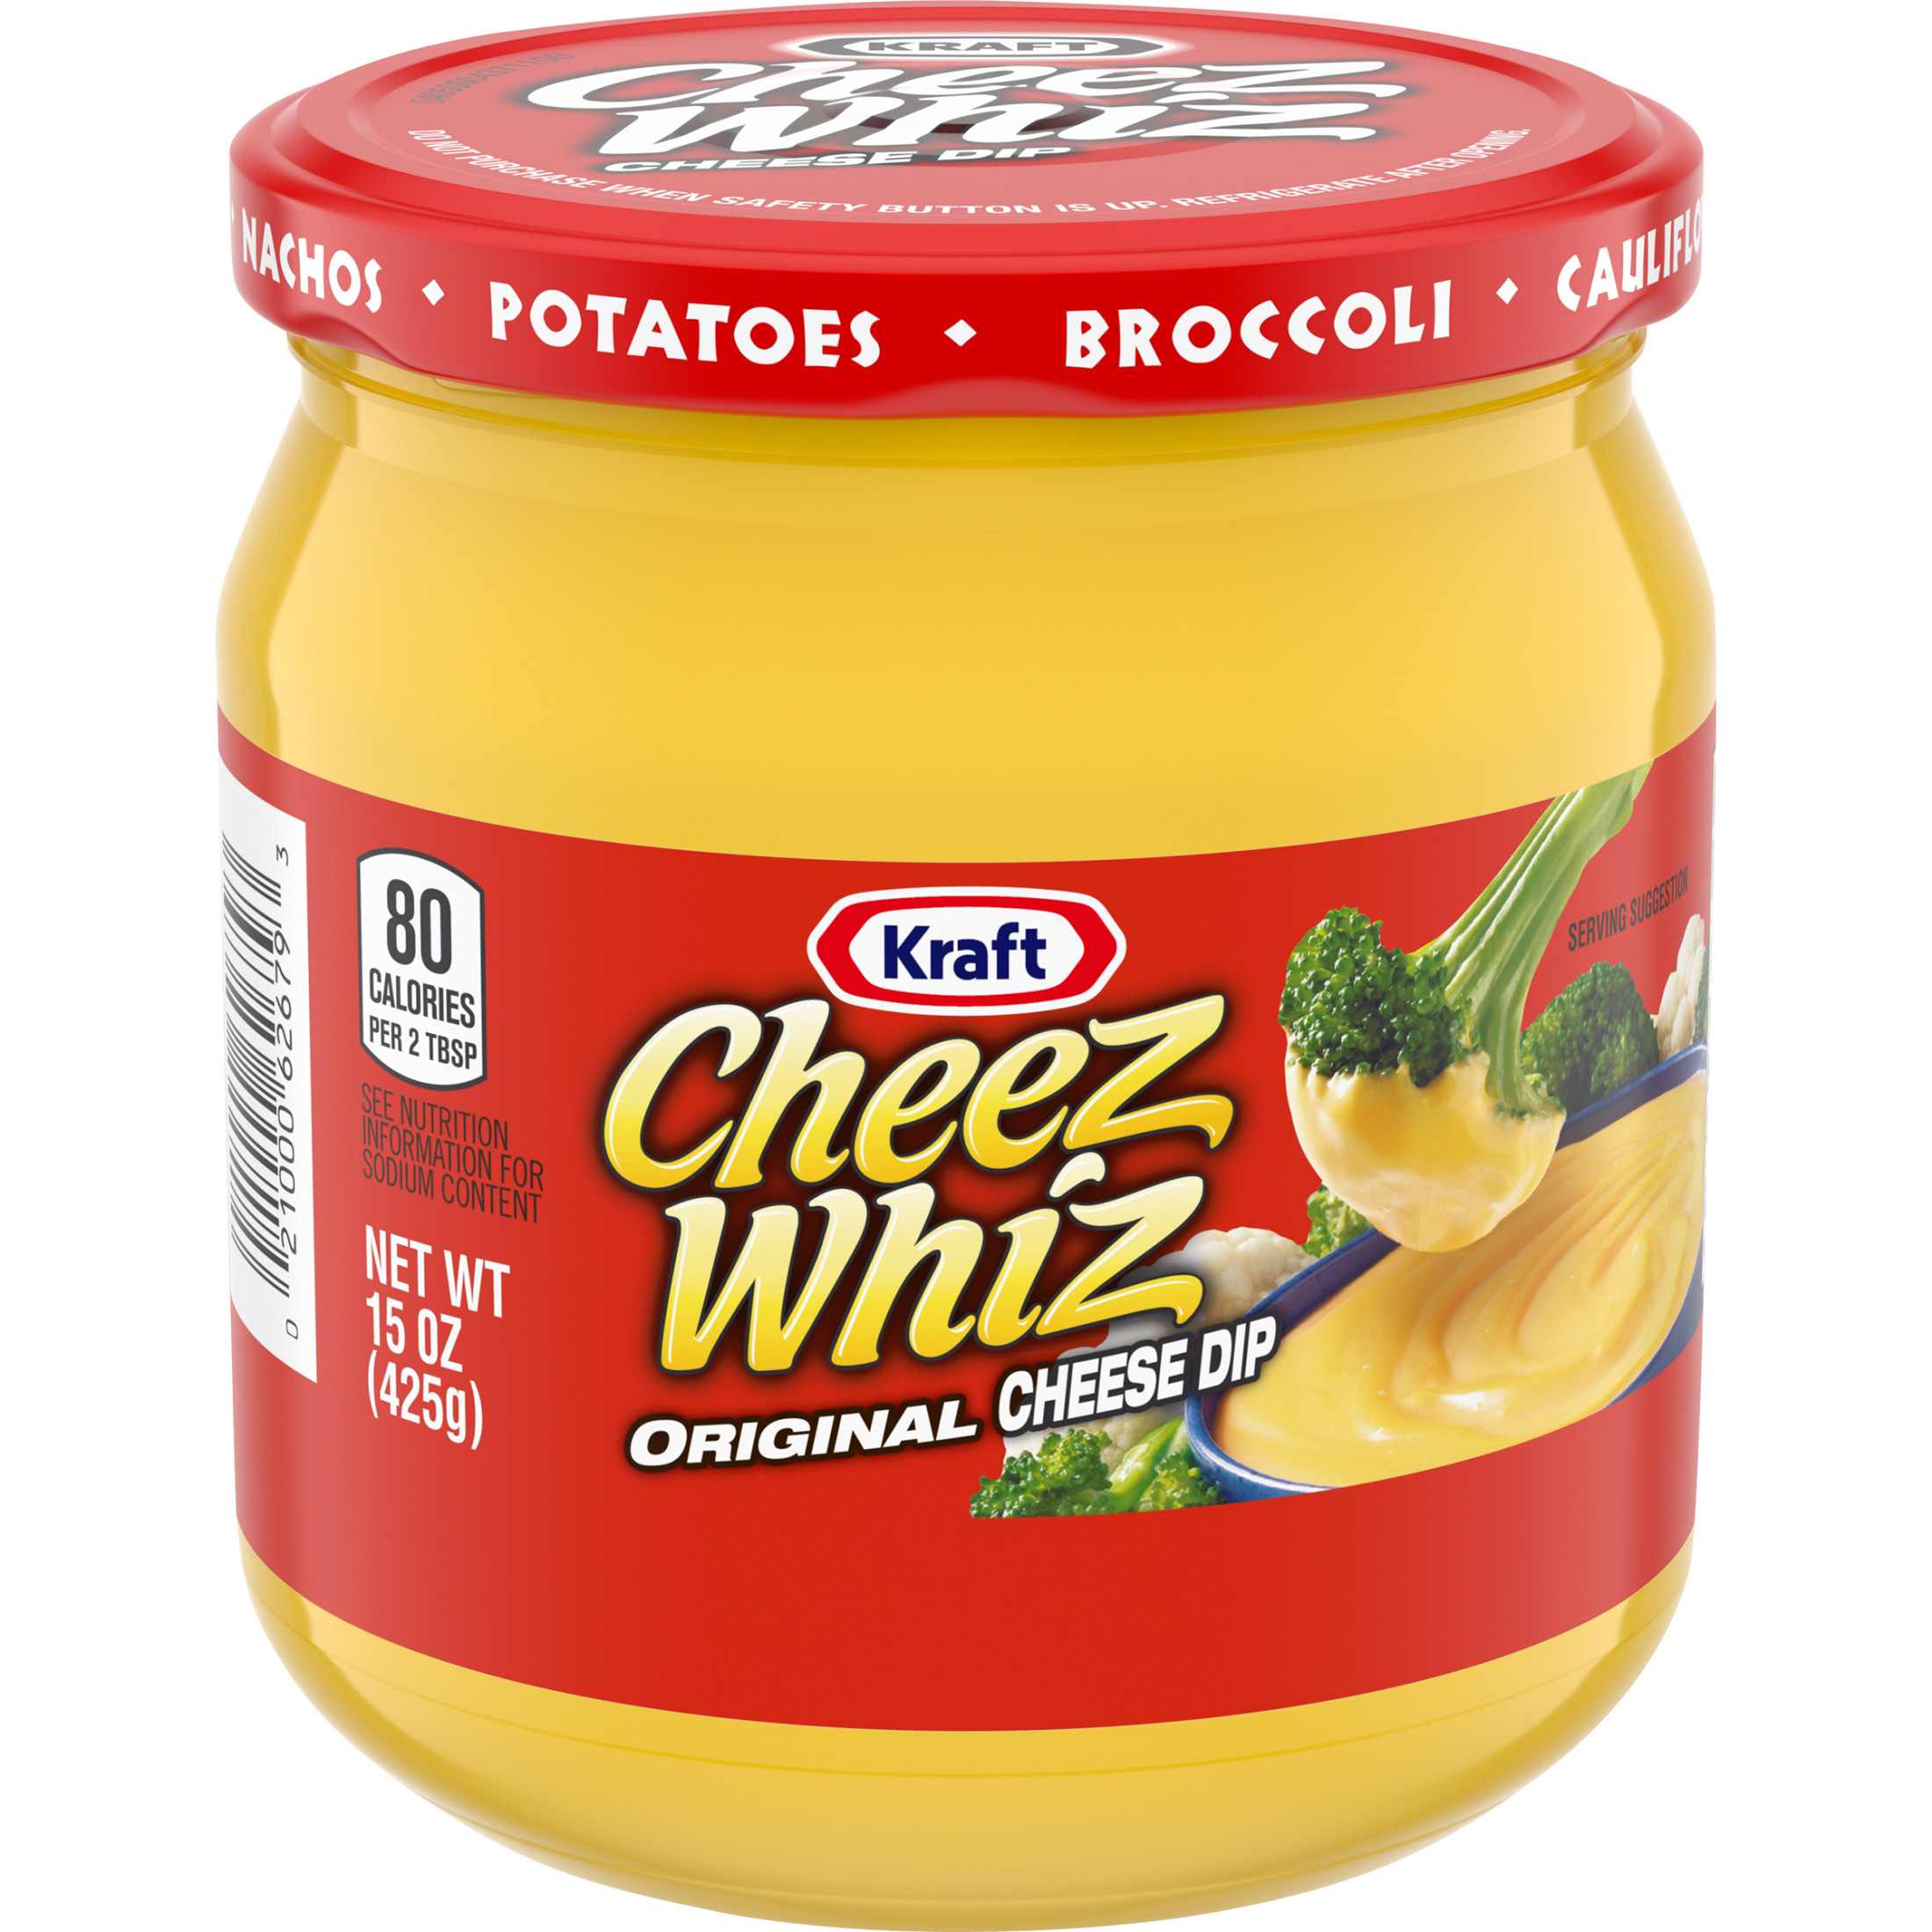 Cheez Whiz Original Cheese Dip, 15 oz Jar - image 1 of 6